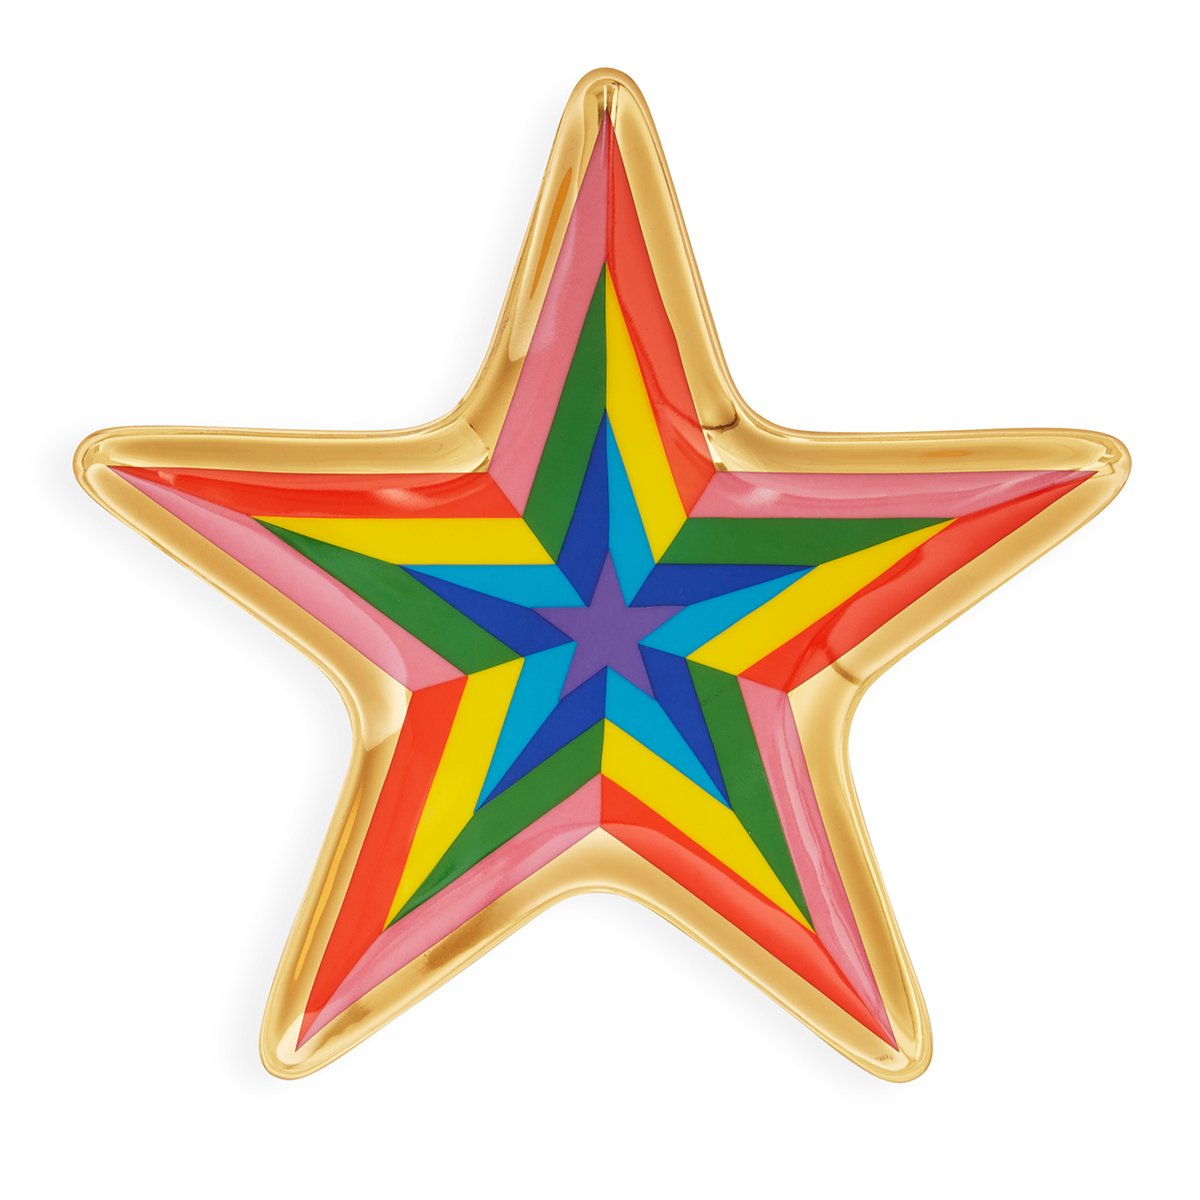 Technicolor Star trinket tray